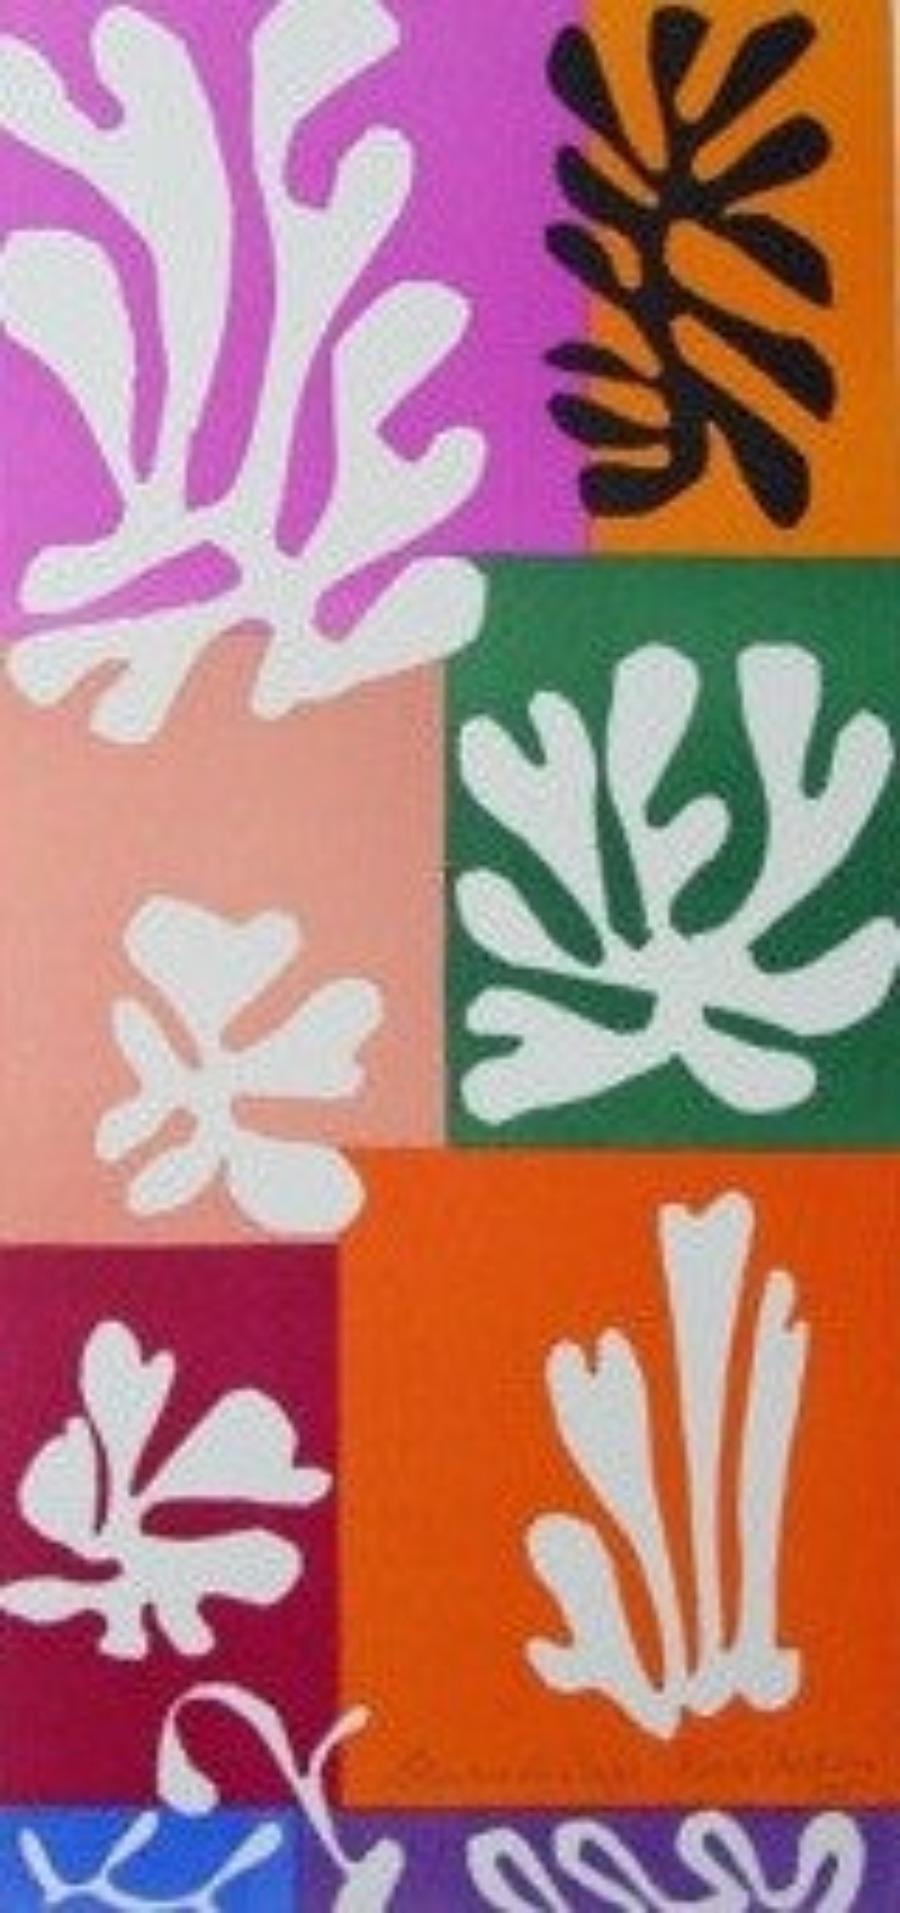 (after) Henri Matisse Abstract Print - Fleurs de Neige, from The Last Works of Henri Matisse